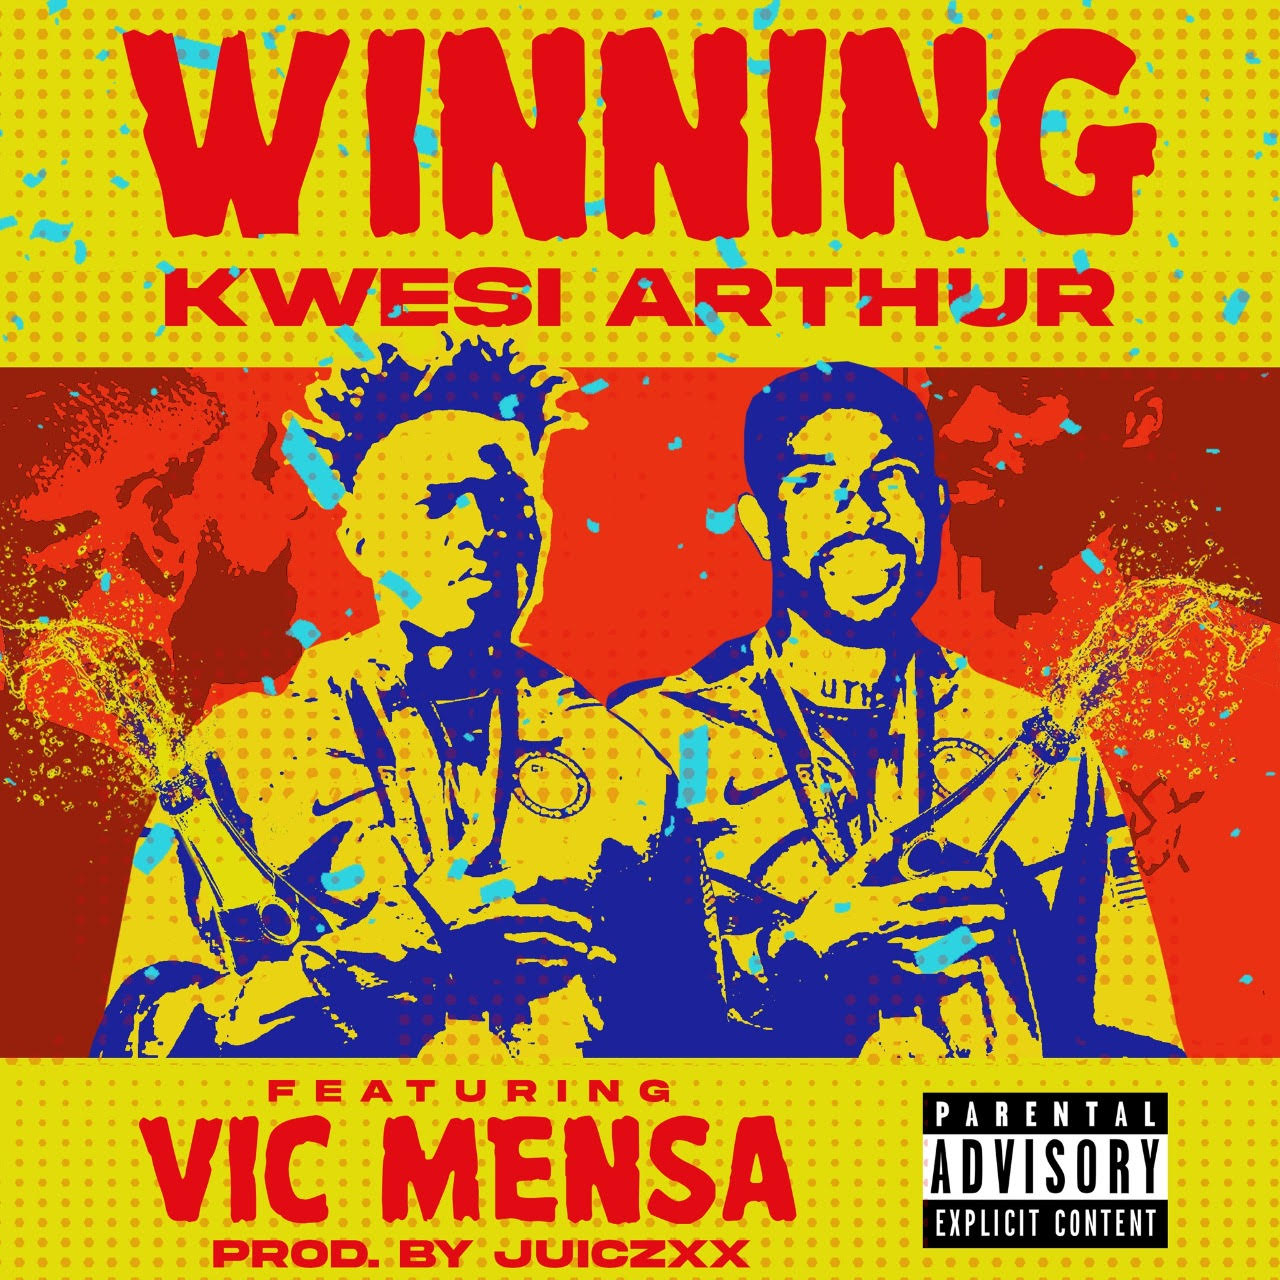 Kwesi Arthur releases his new single "Winning"